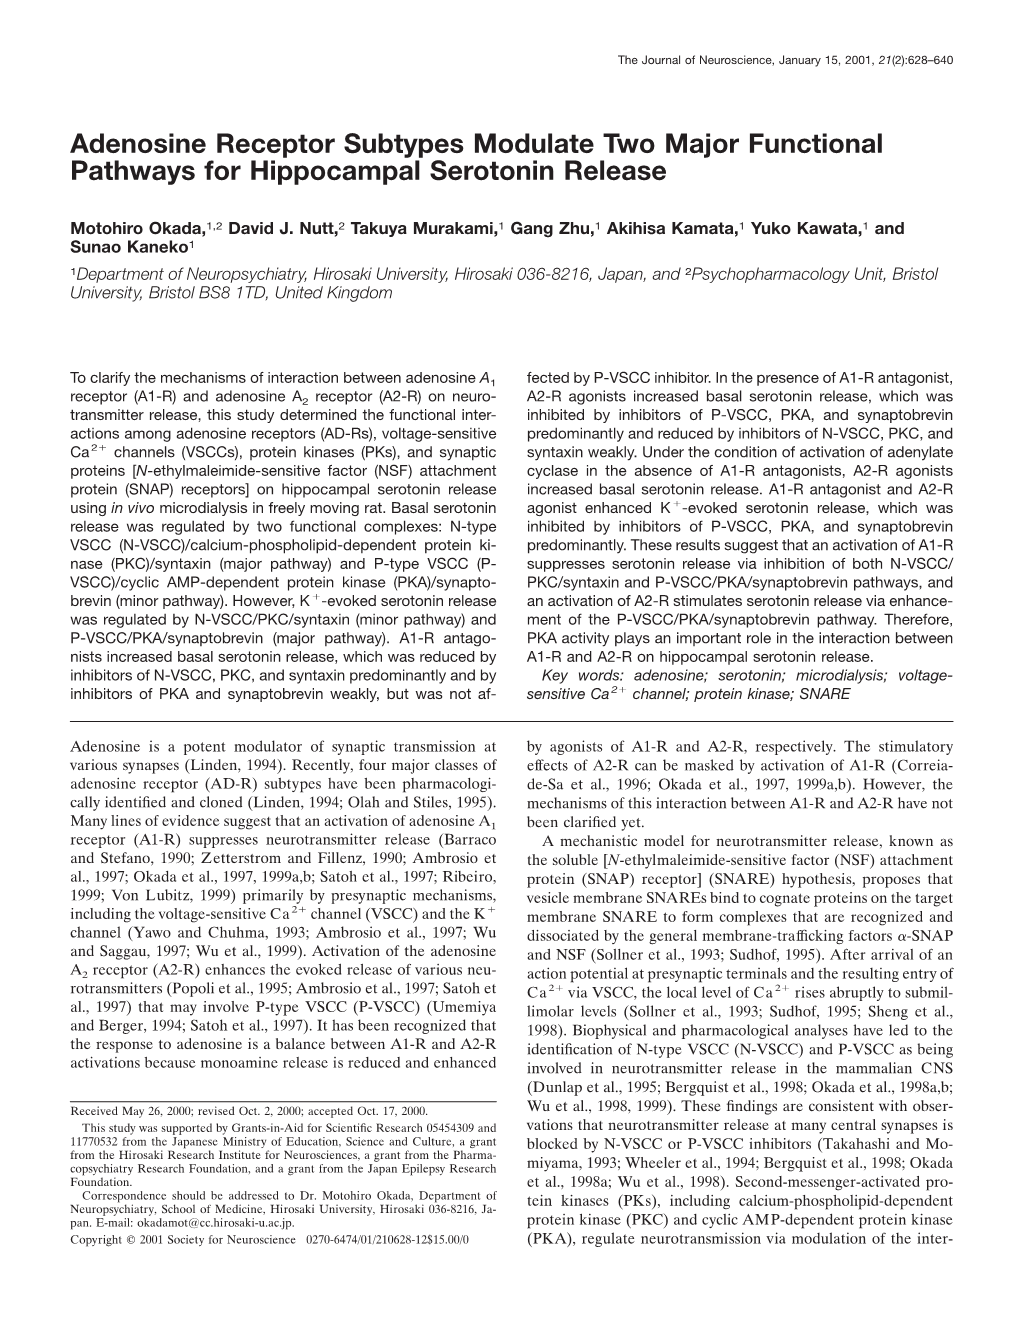 Adenosine Receptor Subtypes Modulate Two Major Functional Pathways for Hippocampal Serotonin Release